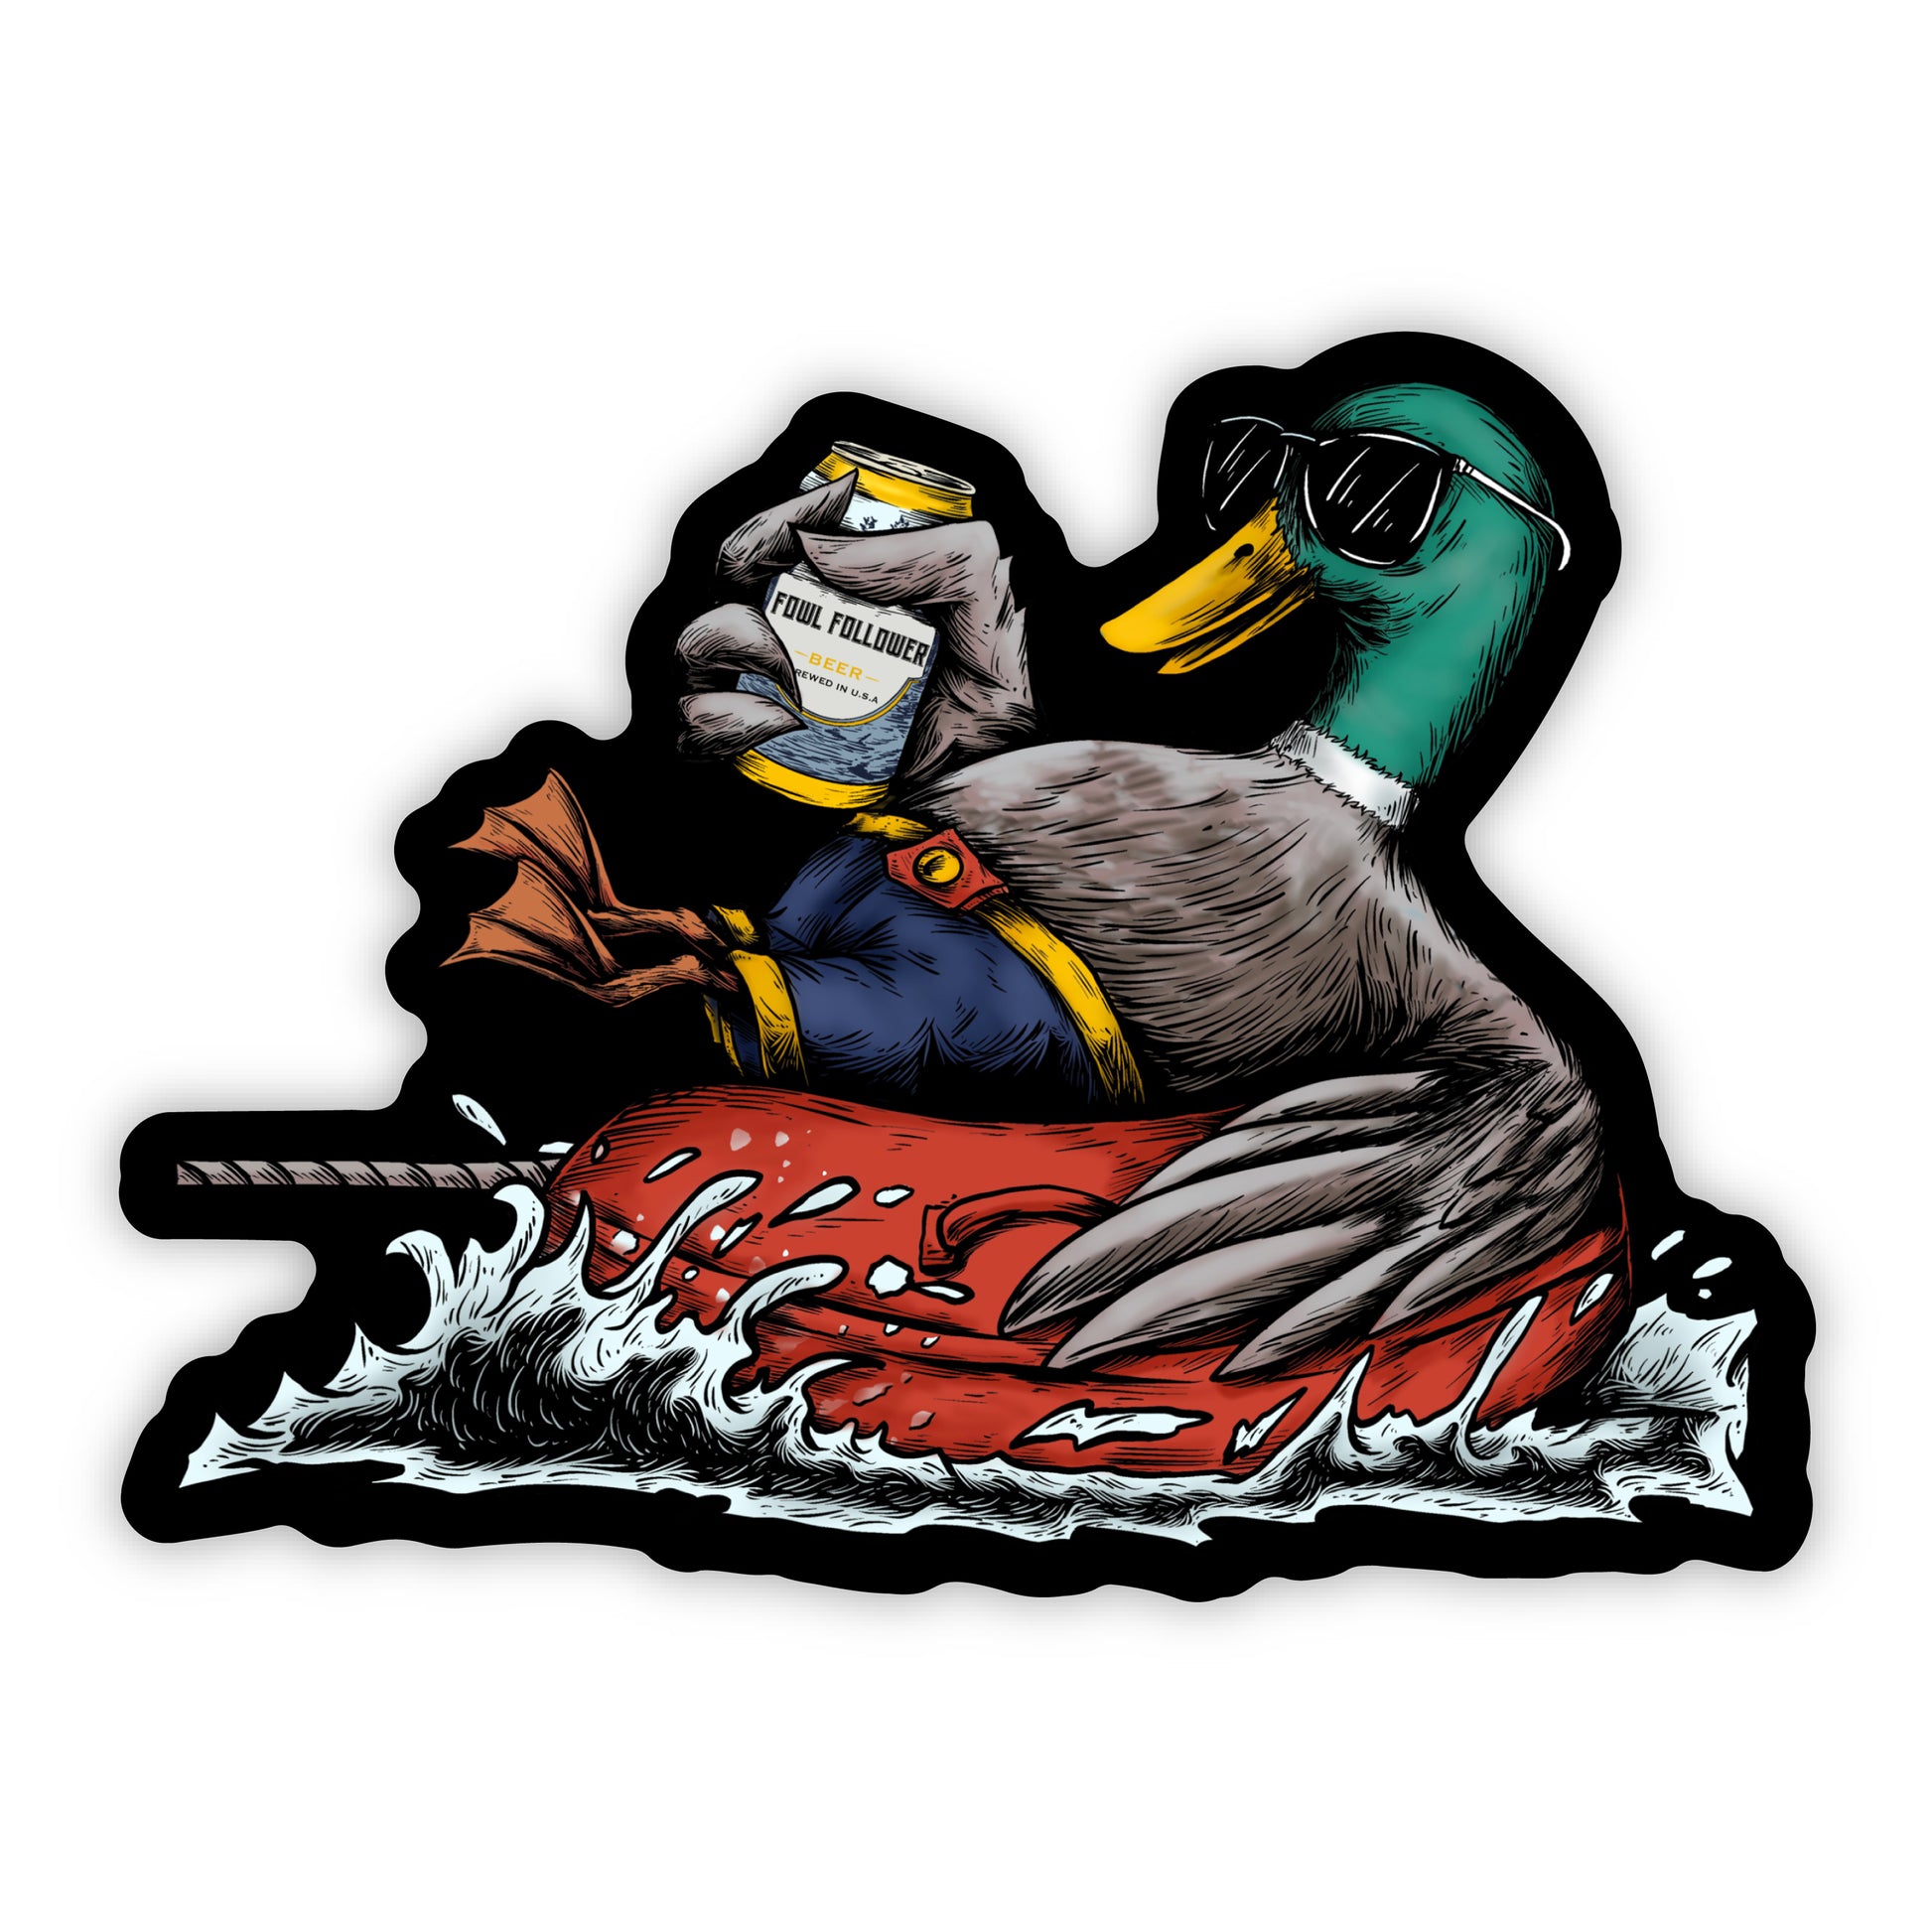 A Mobbin' Mallard Sticker from Fowl Follower on a raft.